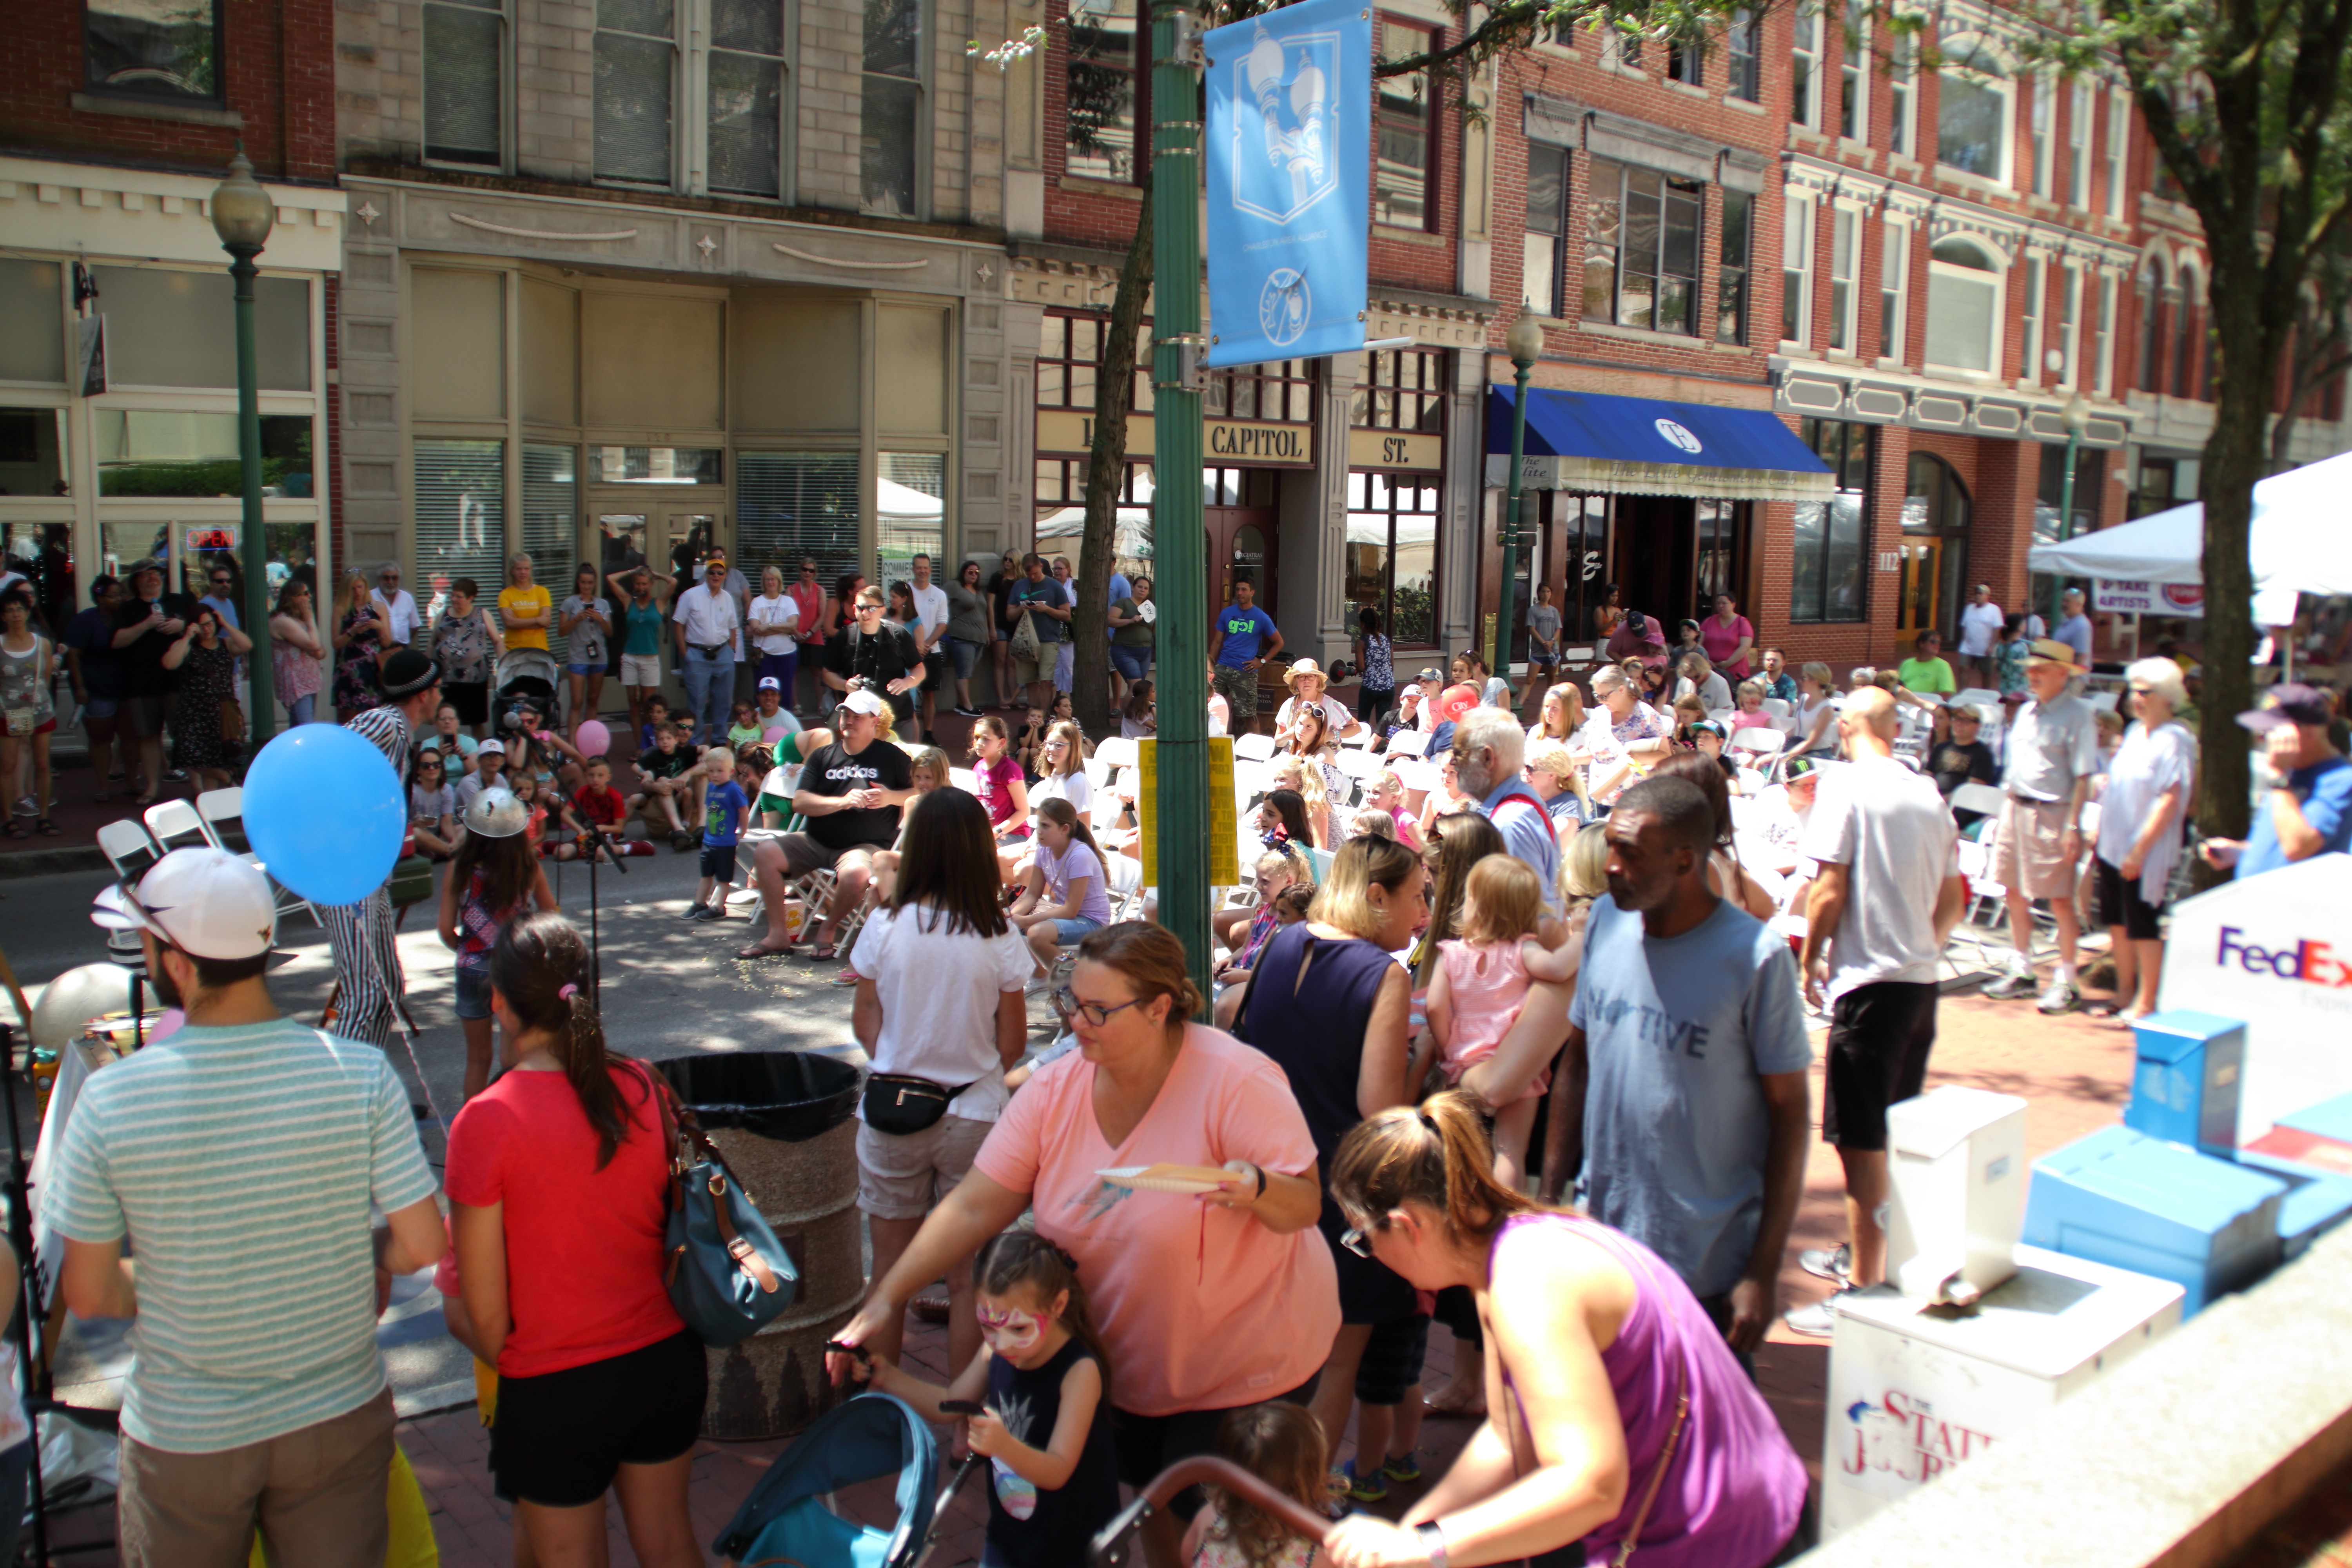 Crowd fills street at fair